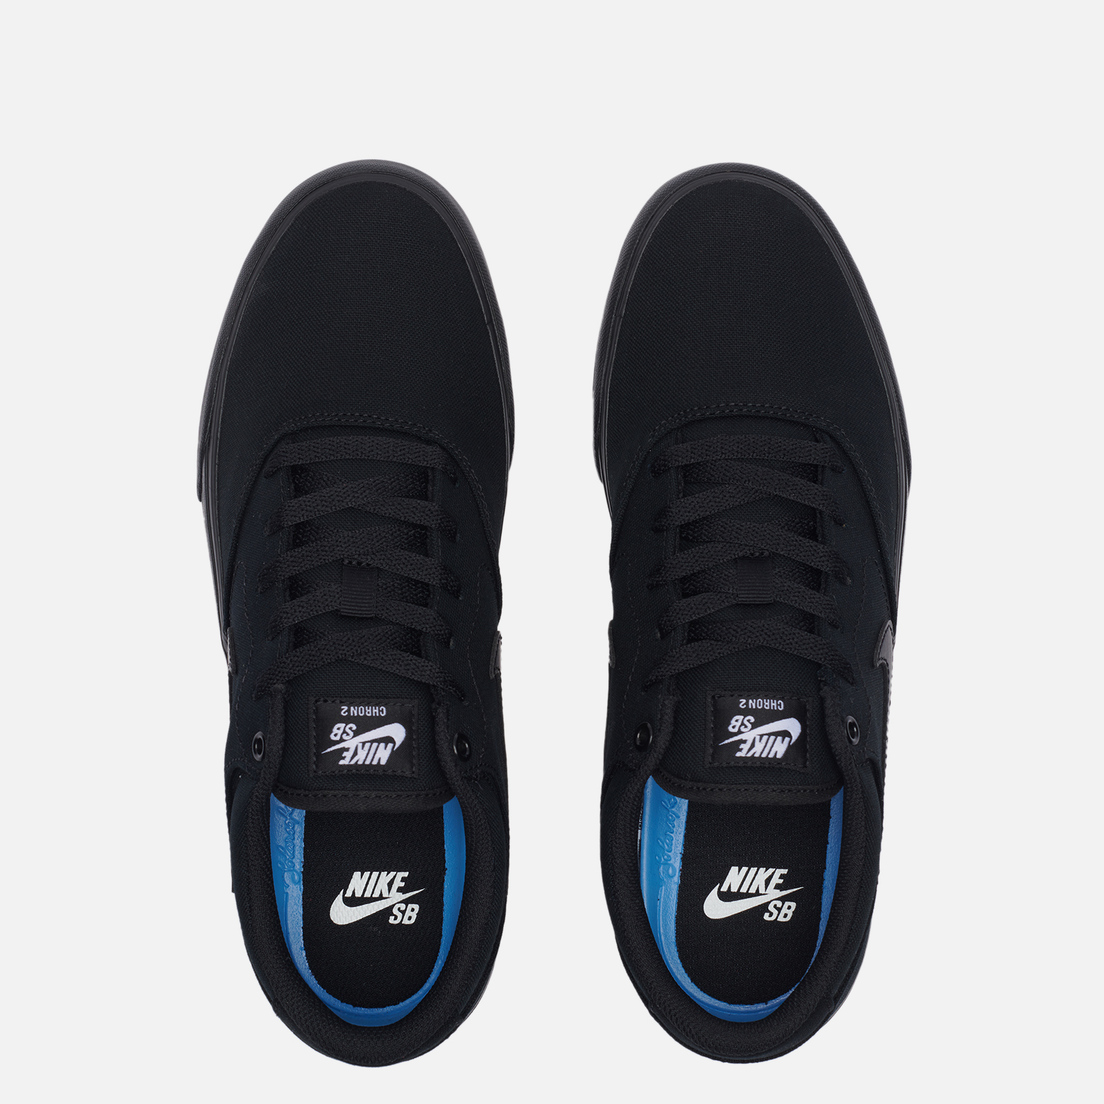 Nike SB Мужские кроссовки Chron 2 CNVS